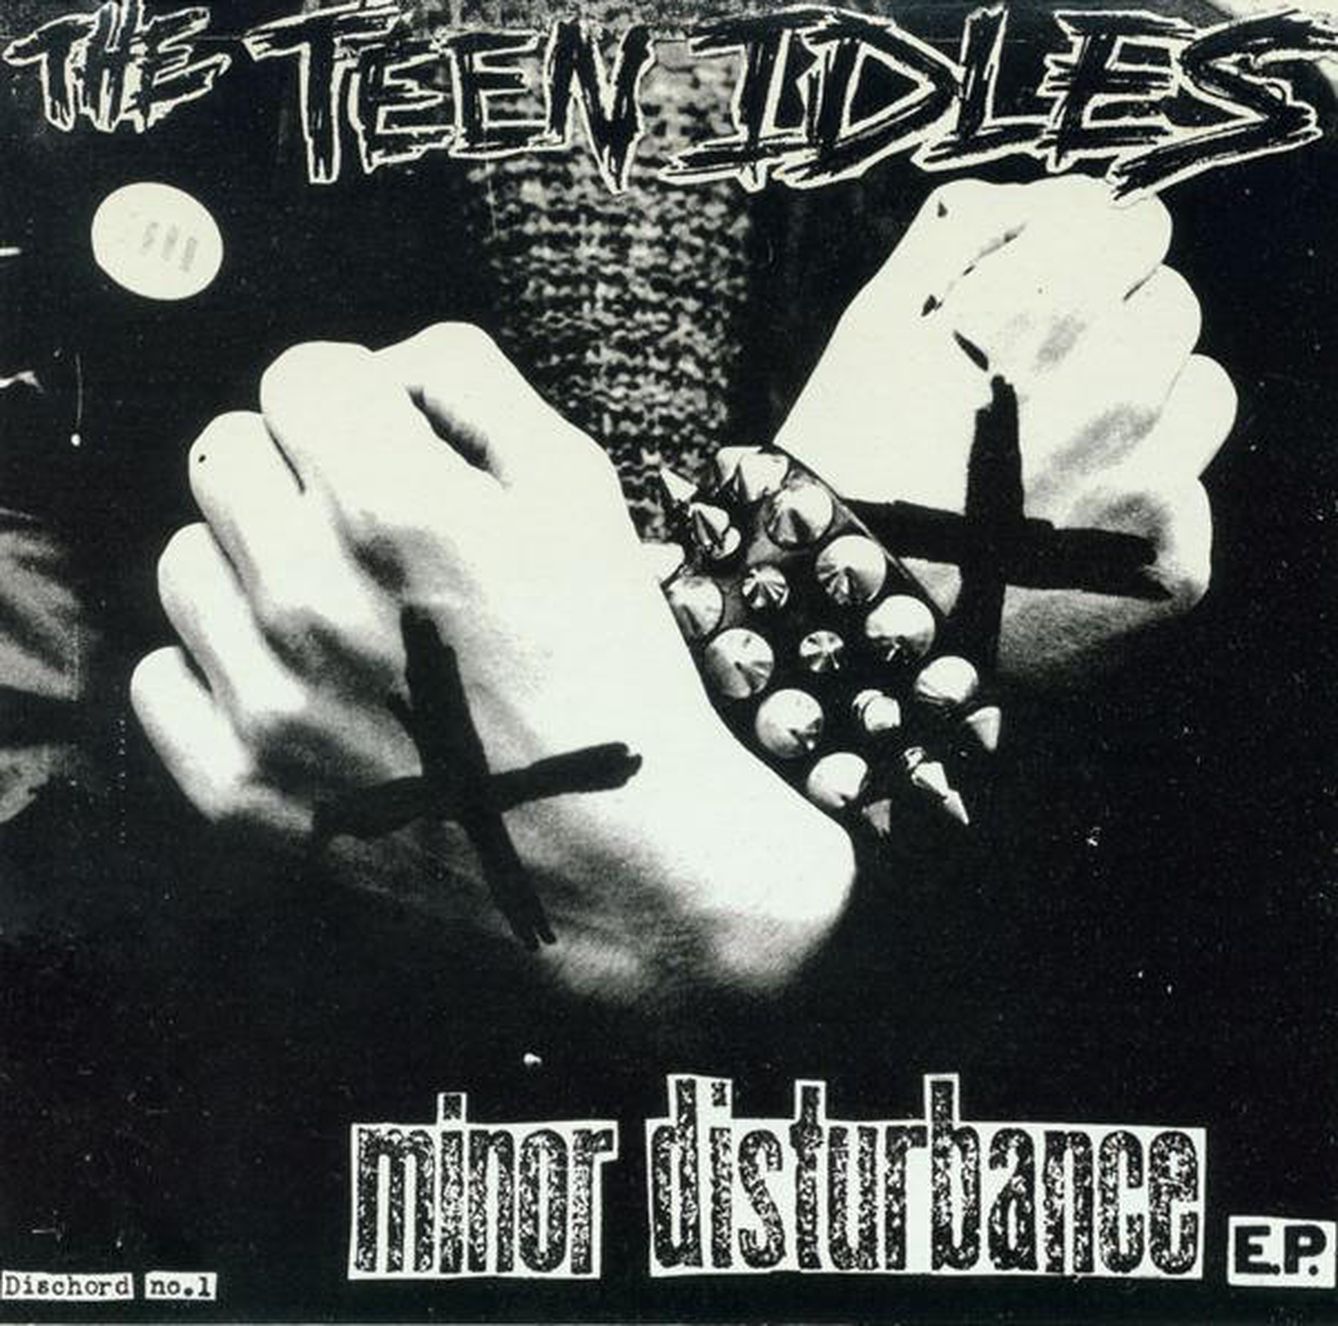 The teen idles - Minor disturbance